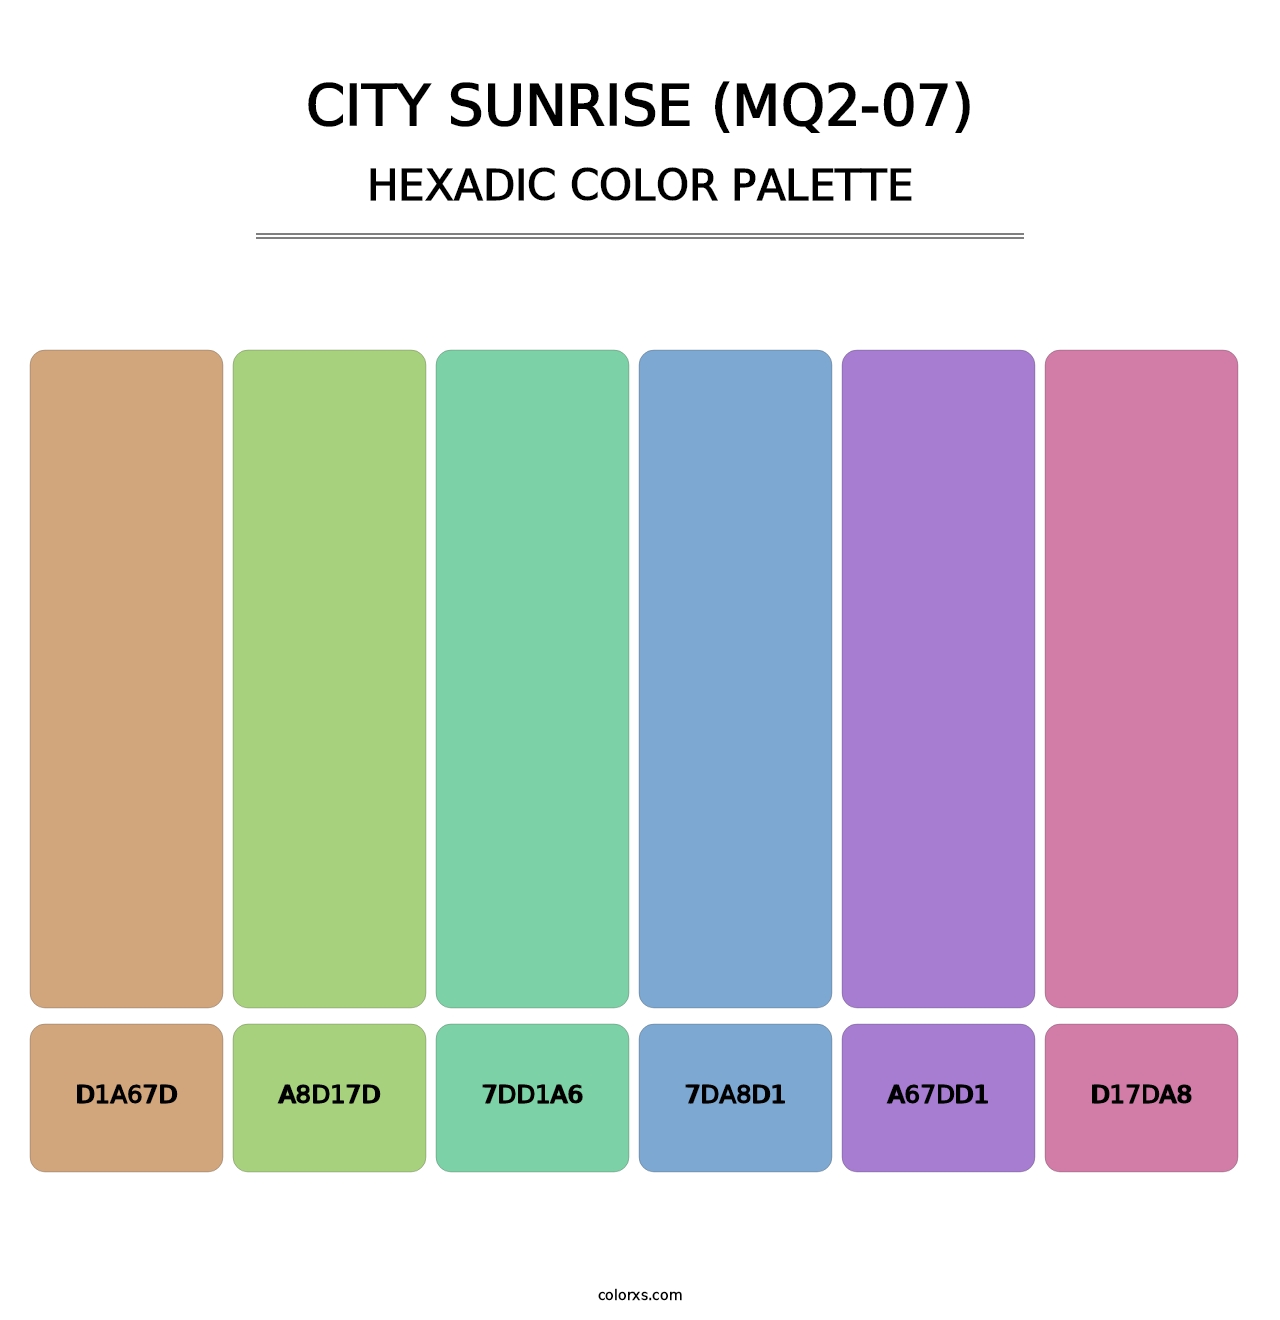 City Sunrise (MQ2-07) - Hexadic Color Palette